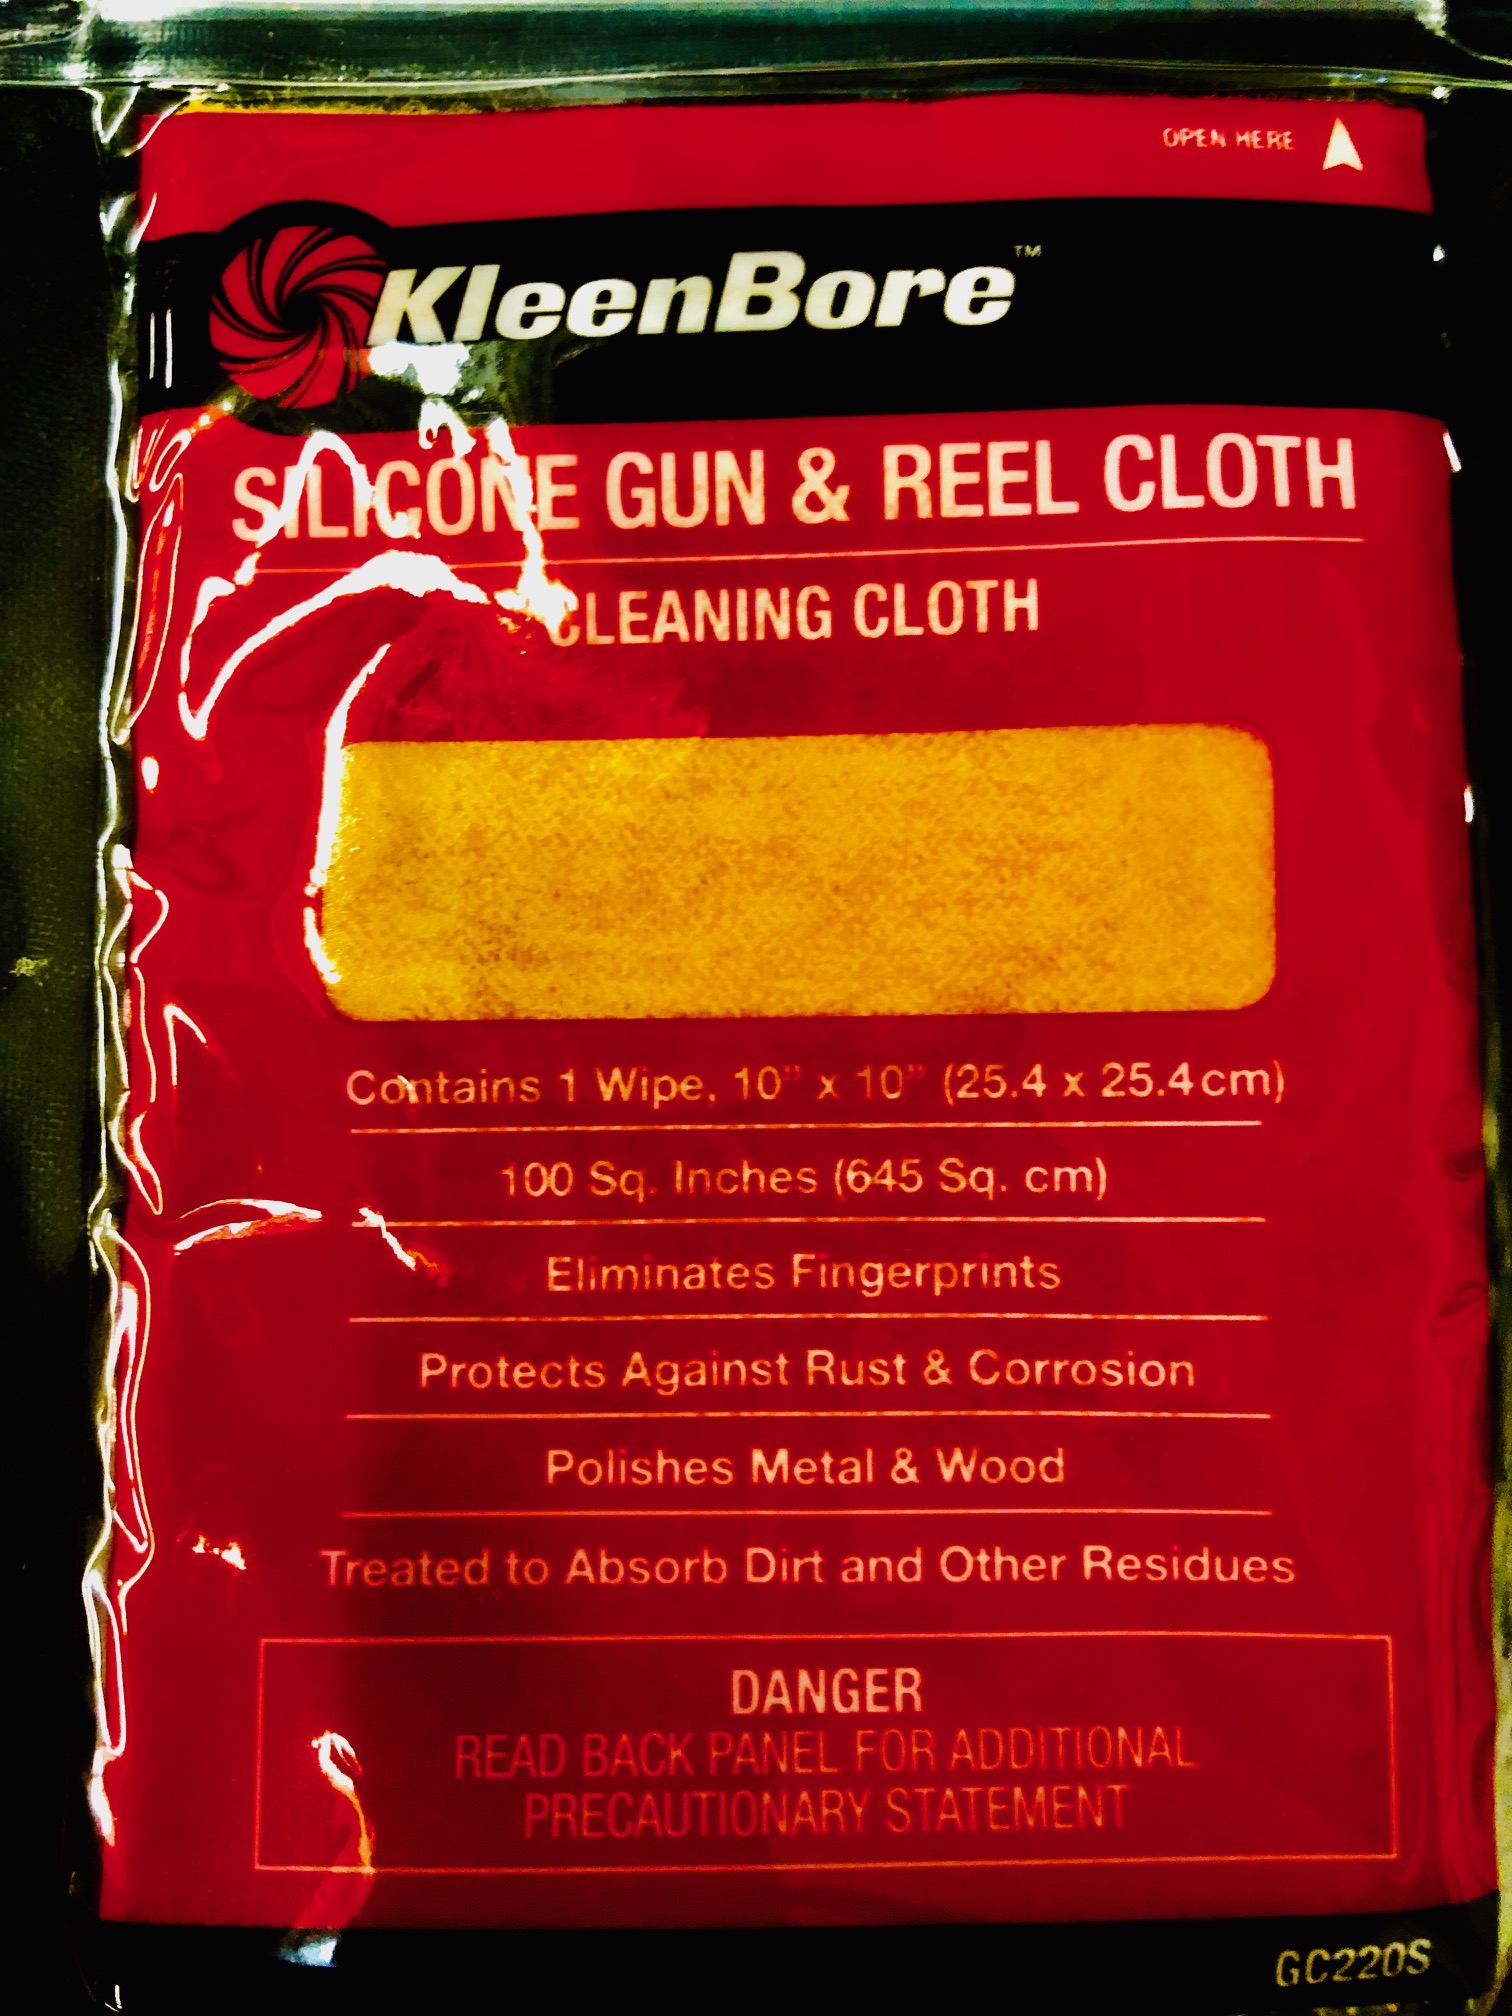 KleenBore Silicone Gun & Reel Cloth